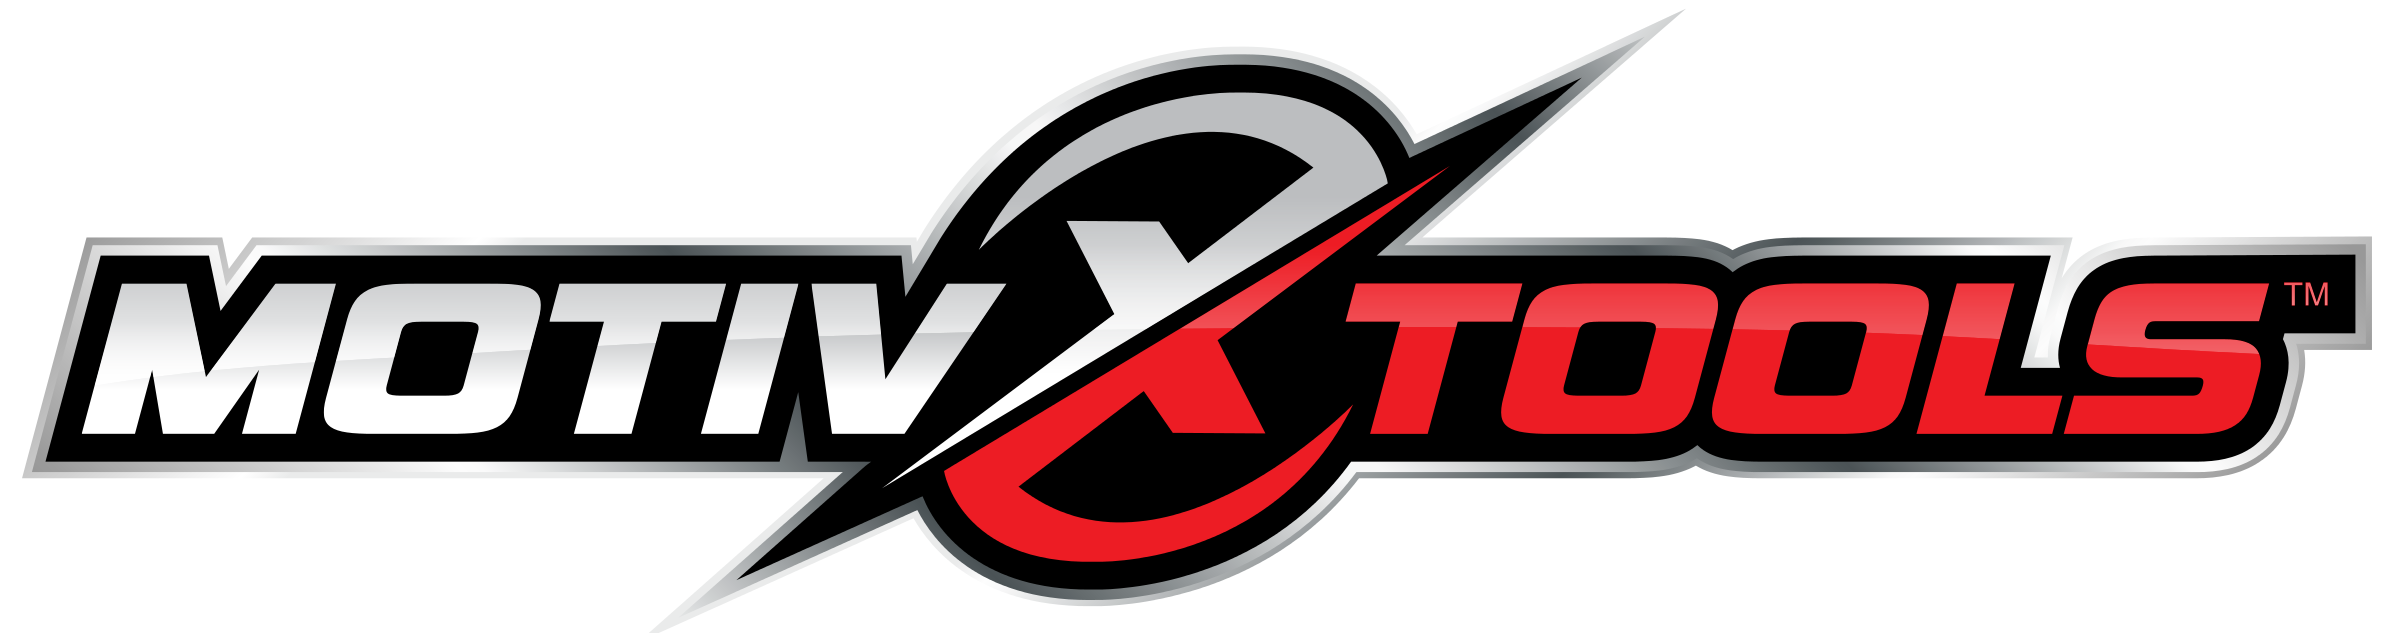 Motivx Tools logo